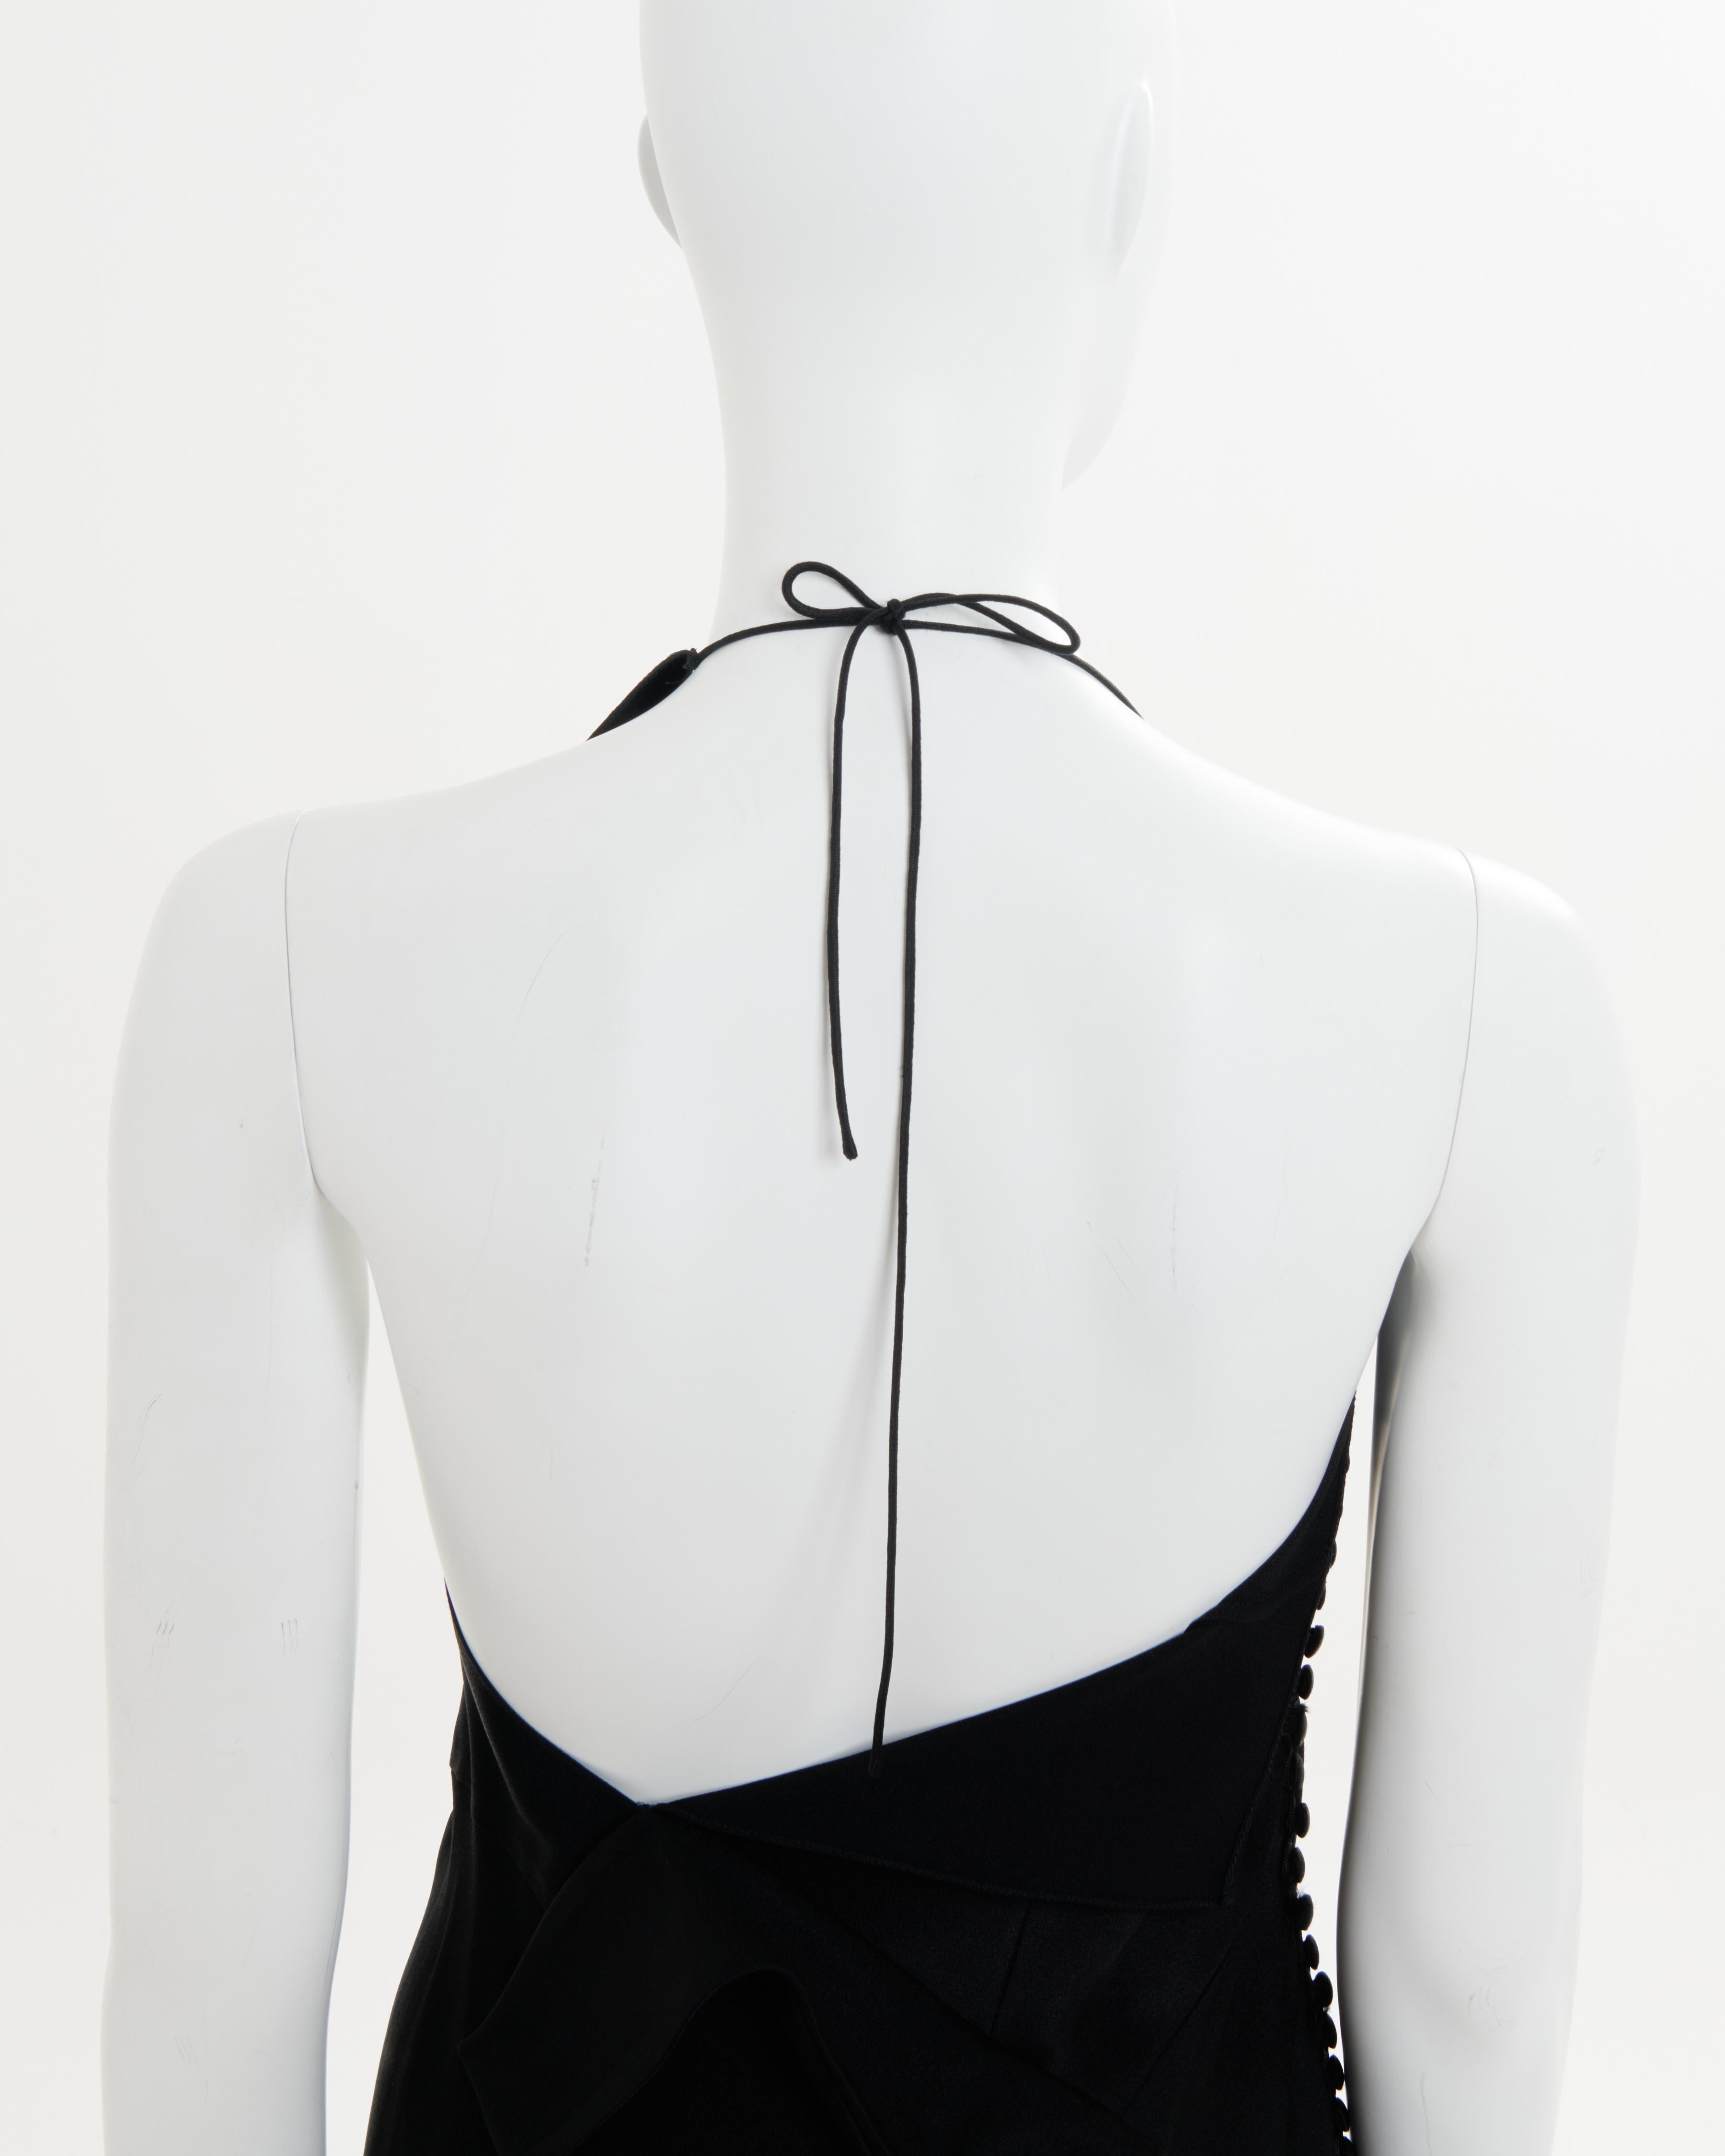 Christian Dior by John Galliano F/W 2000 Black bias-cut trained evening dress For Sale 4